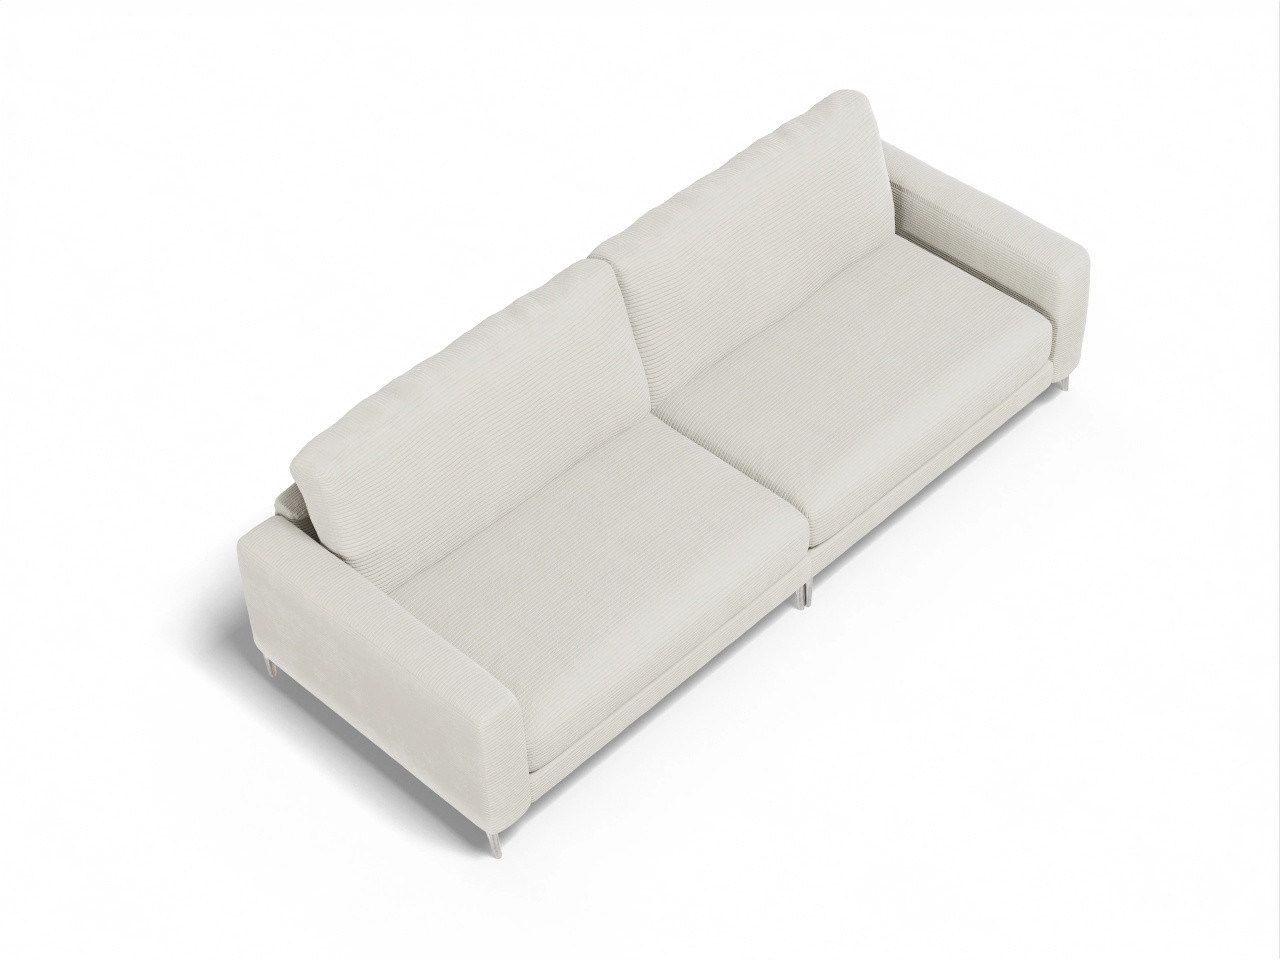 Urbana 3-Sitzer Sofa